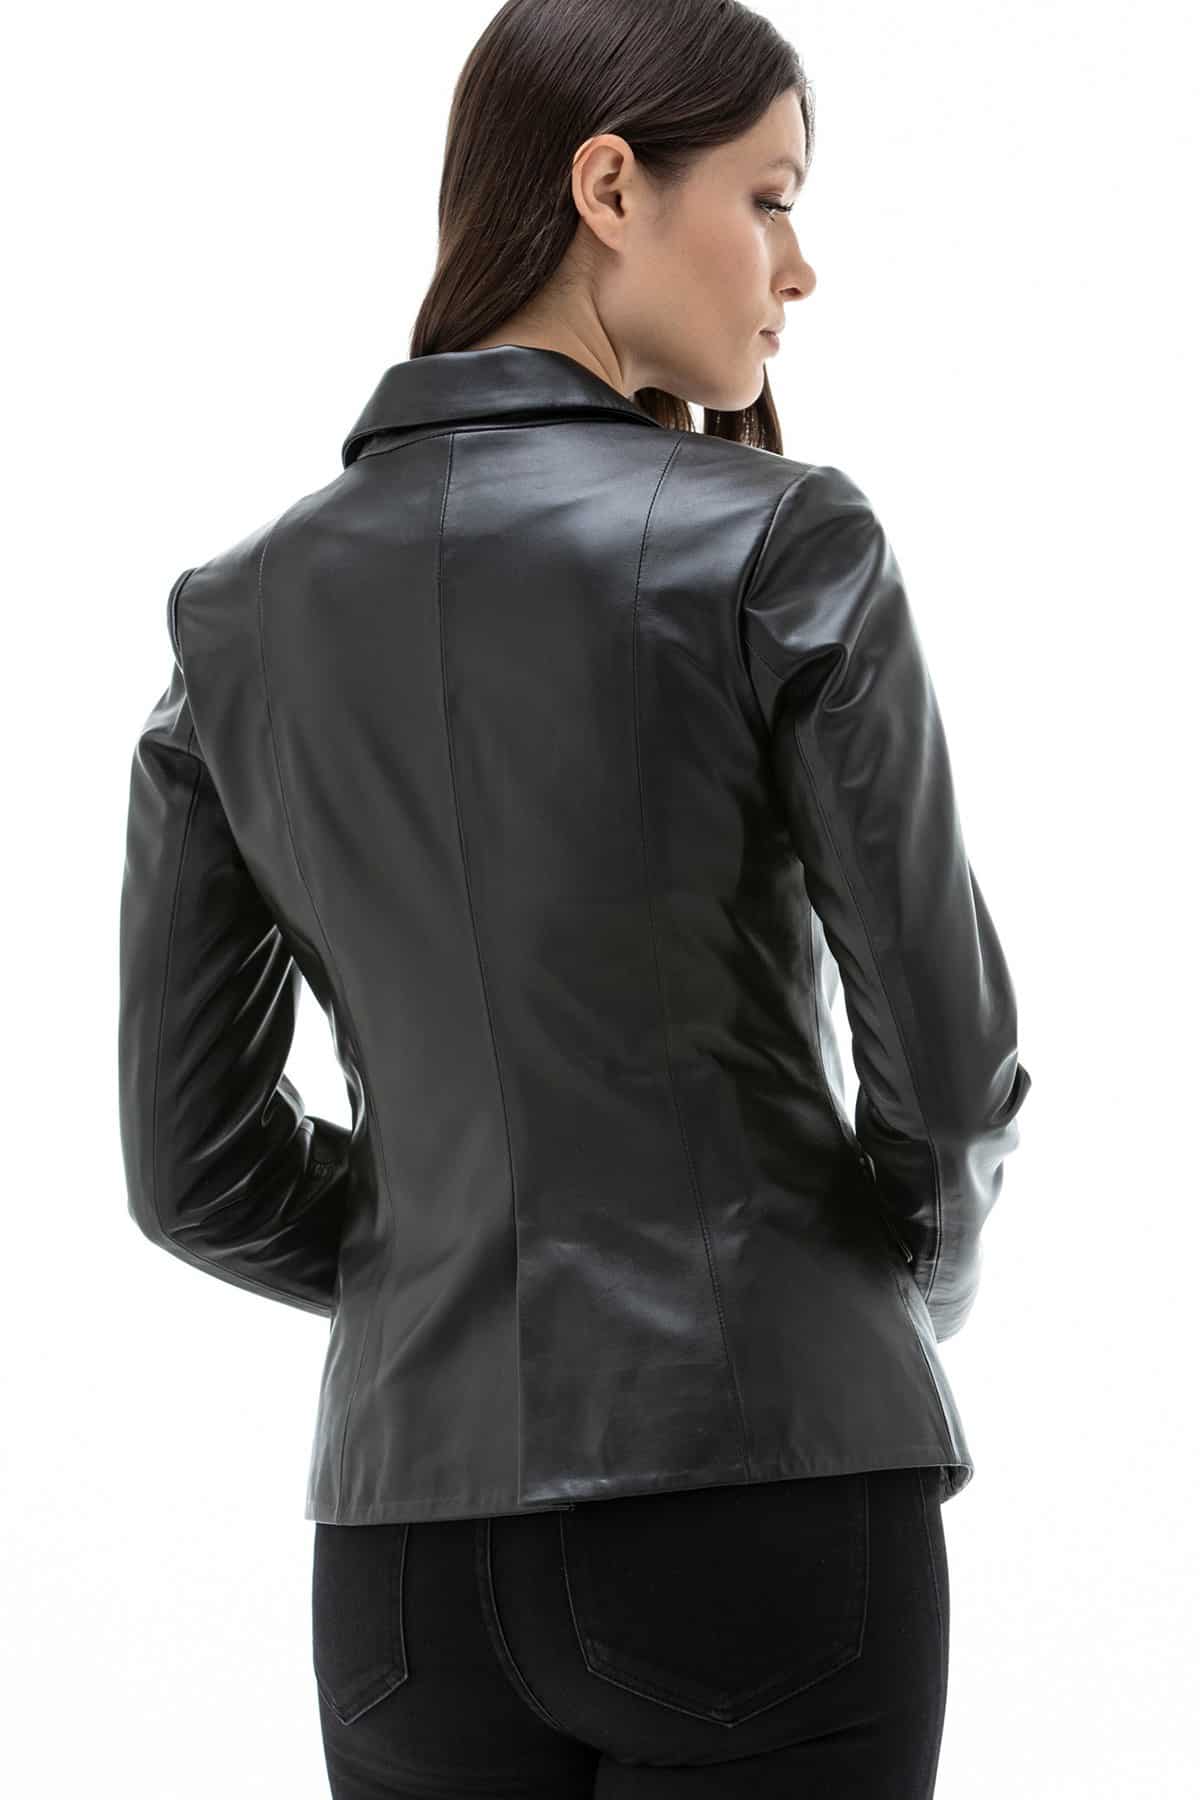 Smart Range Mystique Ladies Dark Green Biker Style Motorcycle Designer  Nappa Leather Jacket (4 US / 8 UK) at Amazon Women's Coats Shop